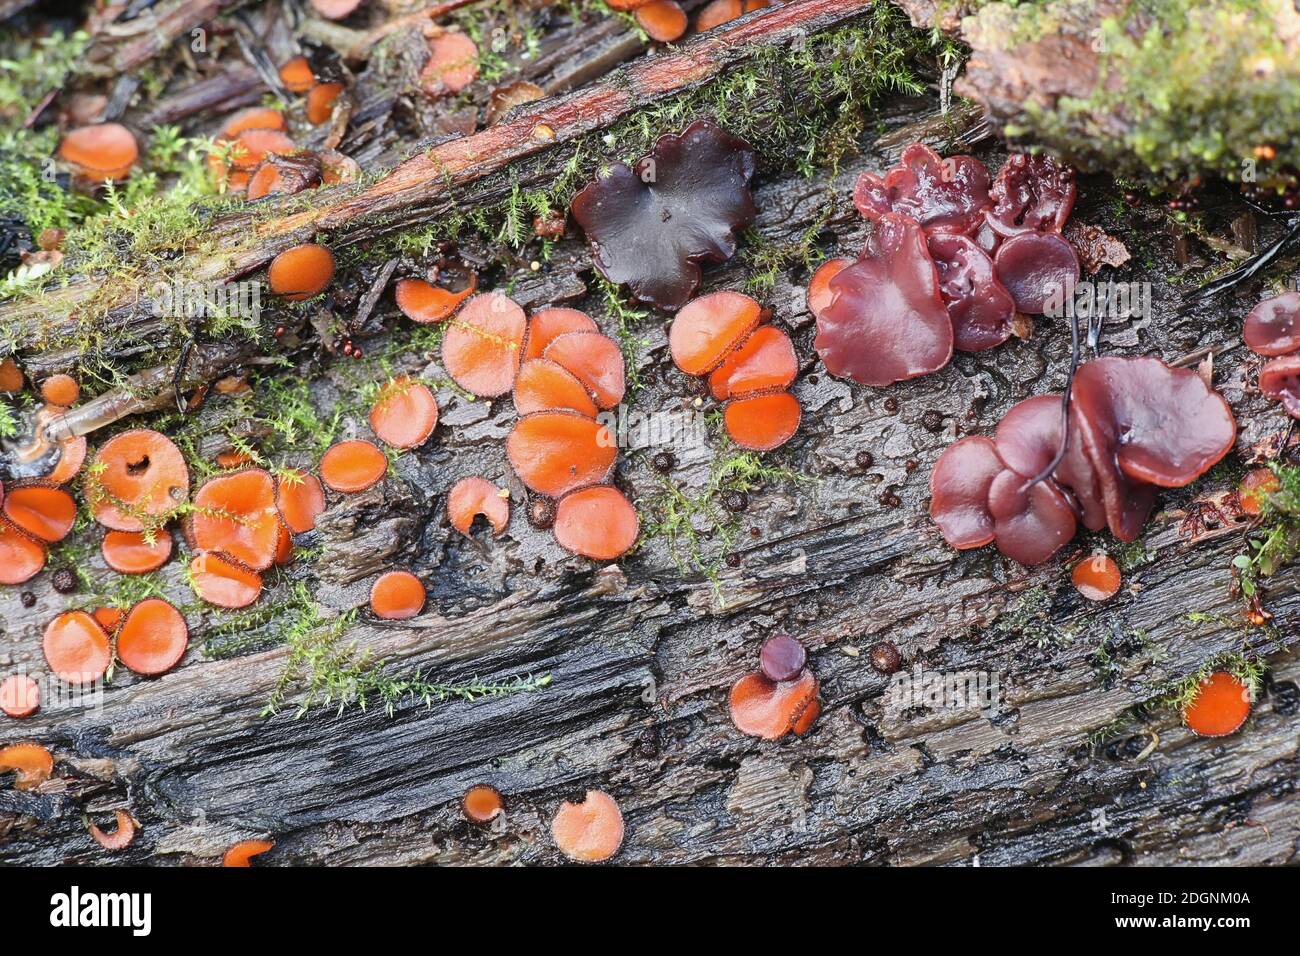 Scutellinia scutellata, known as the eyelash cup, the Molly eye-winker, the scarlet elf cap or the eyelash fungus, wild mushroom from Finland Stock Photo